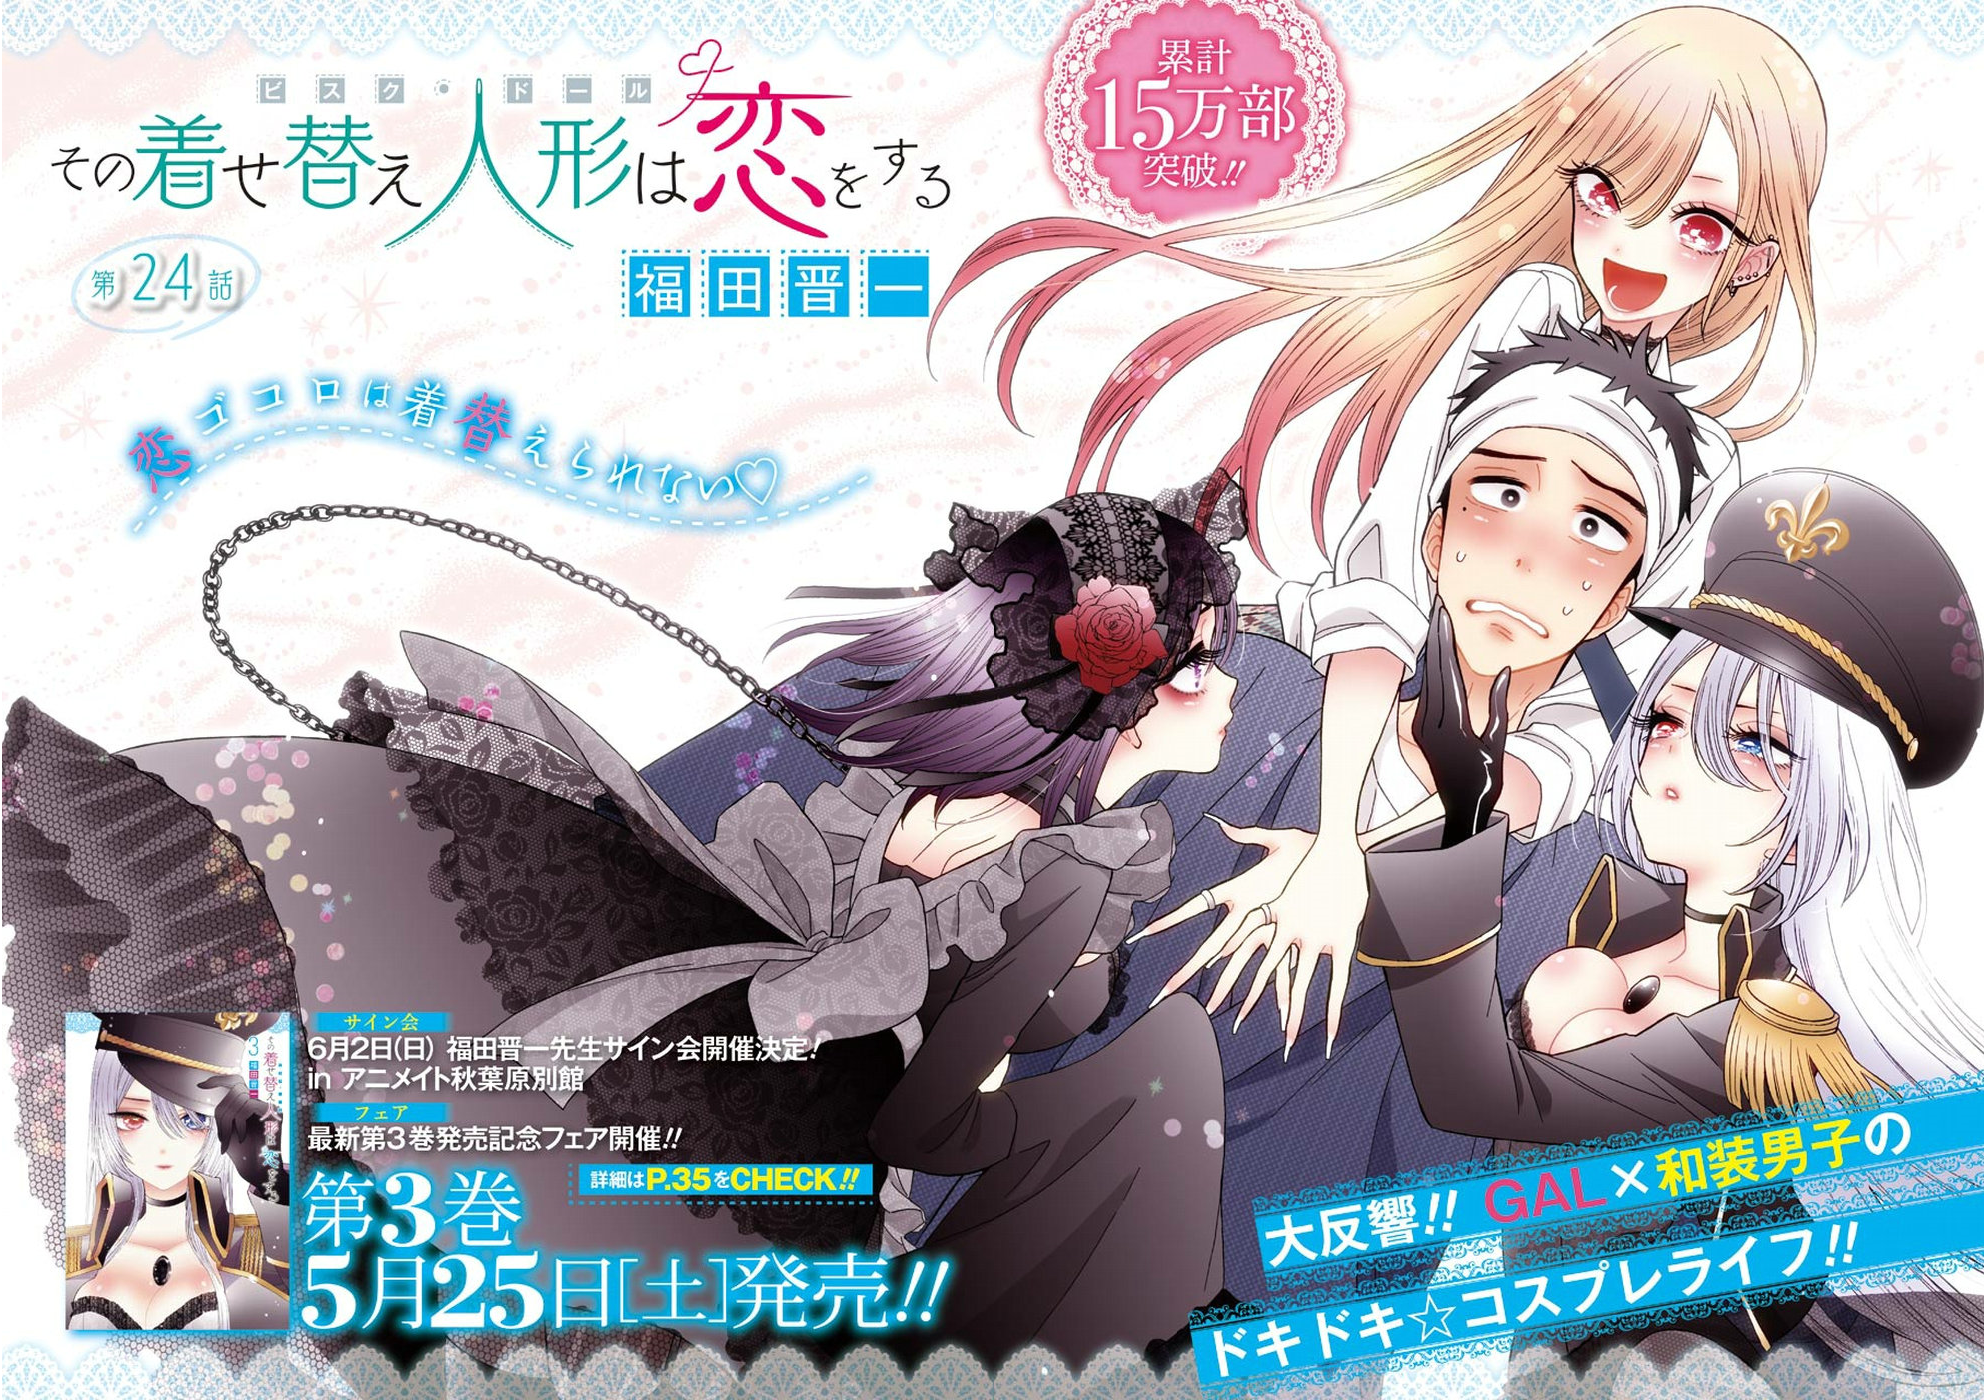 Manga Mogura RE on X: Cosplay romance manga series Sono Bisque Doll wa  koi o suru(My Dress-Up Darling) by Shinichi Fukuda will get a TV anime  adaption English release @SquareEnixBooks French release @